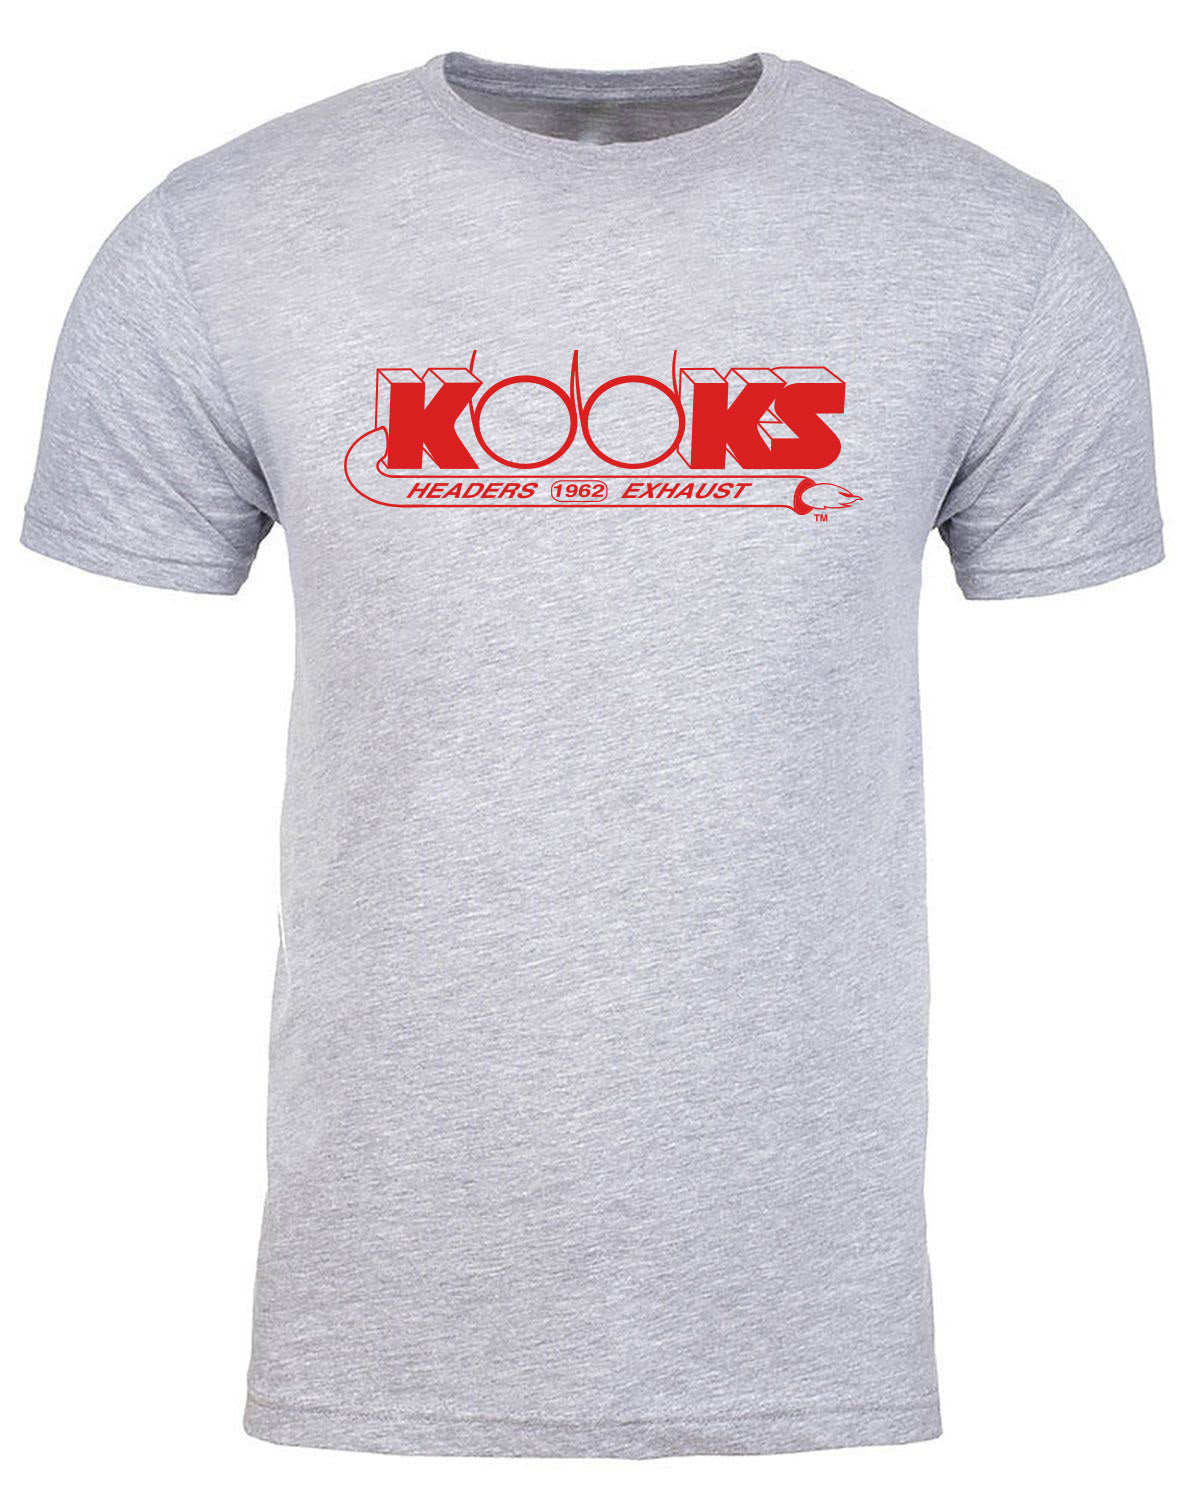 Kooks Custom Headers T-Shirt TS-100648-01